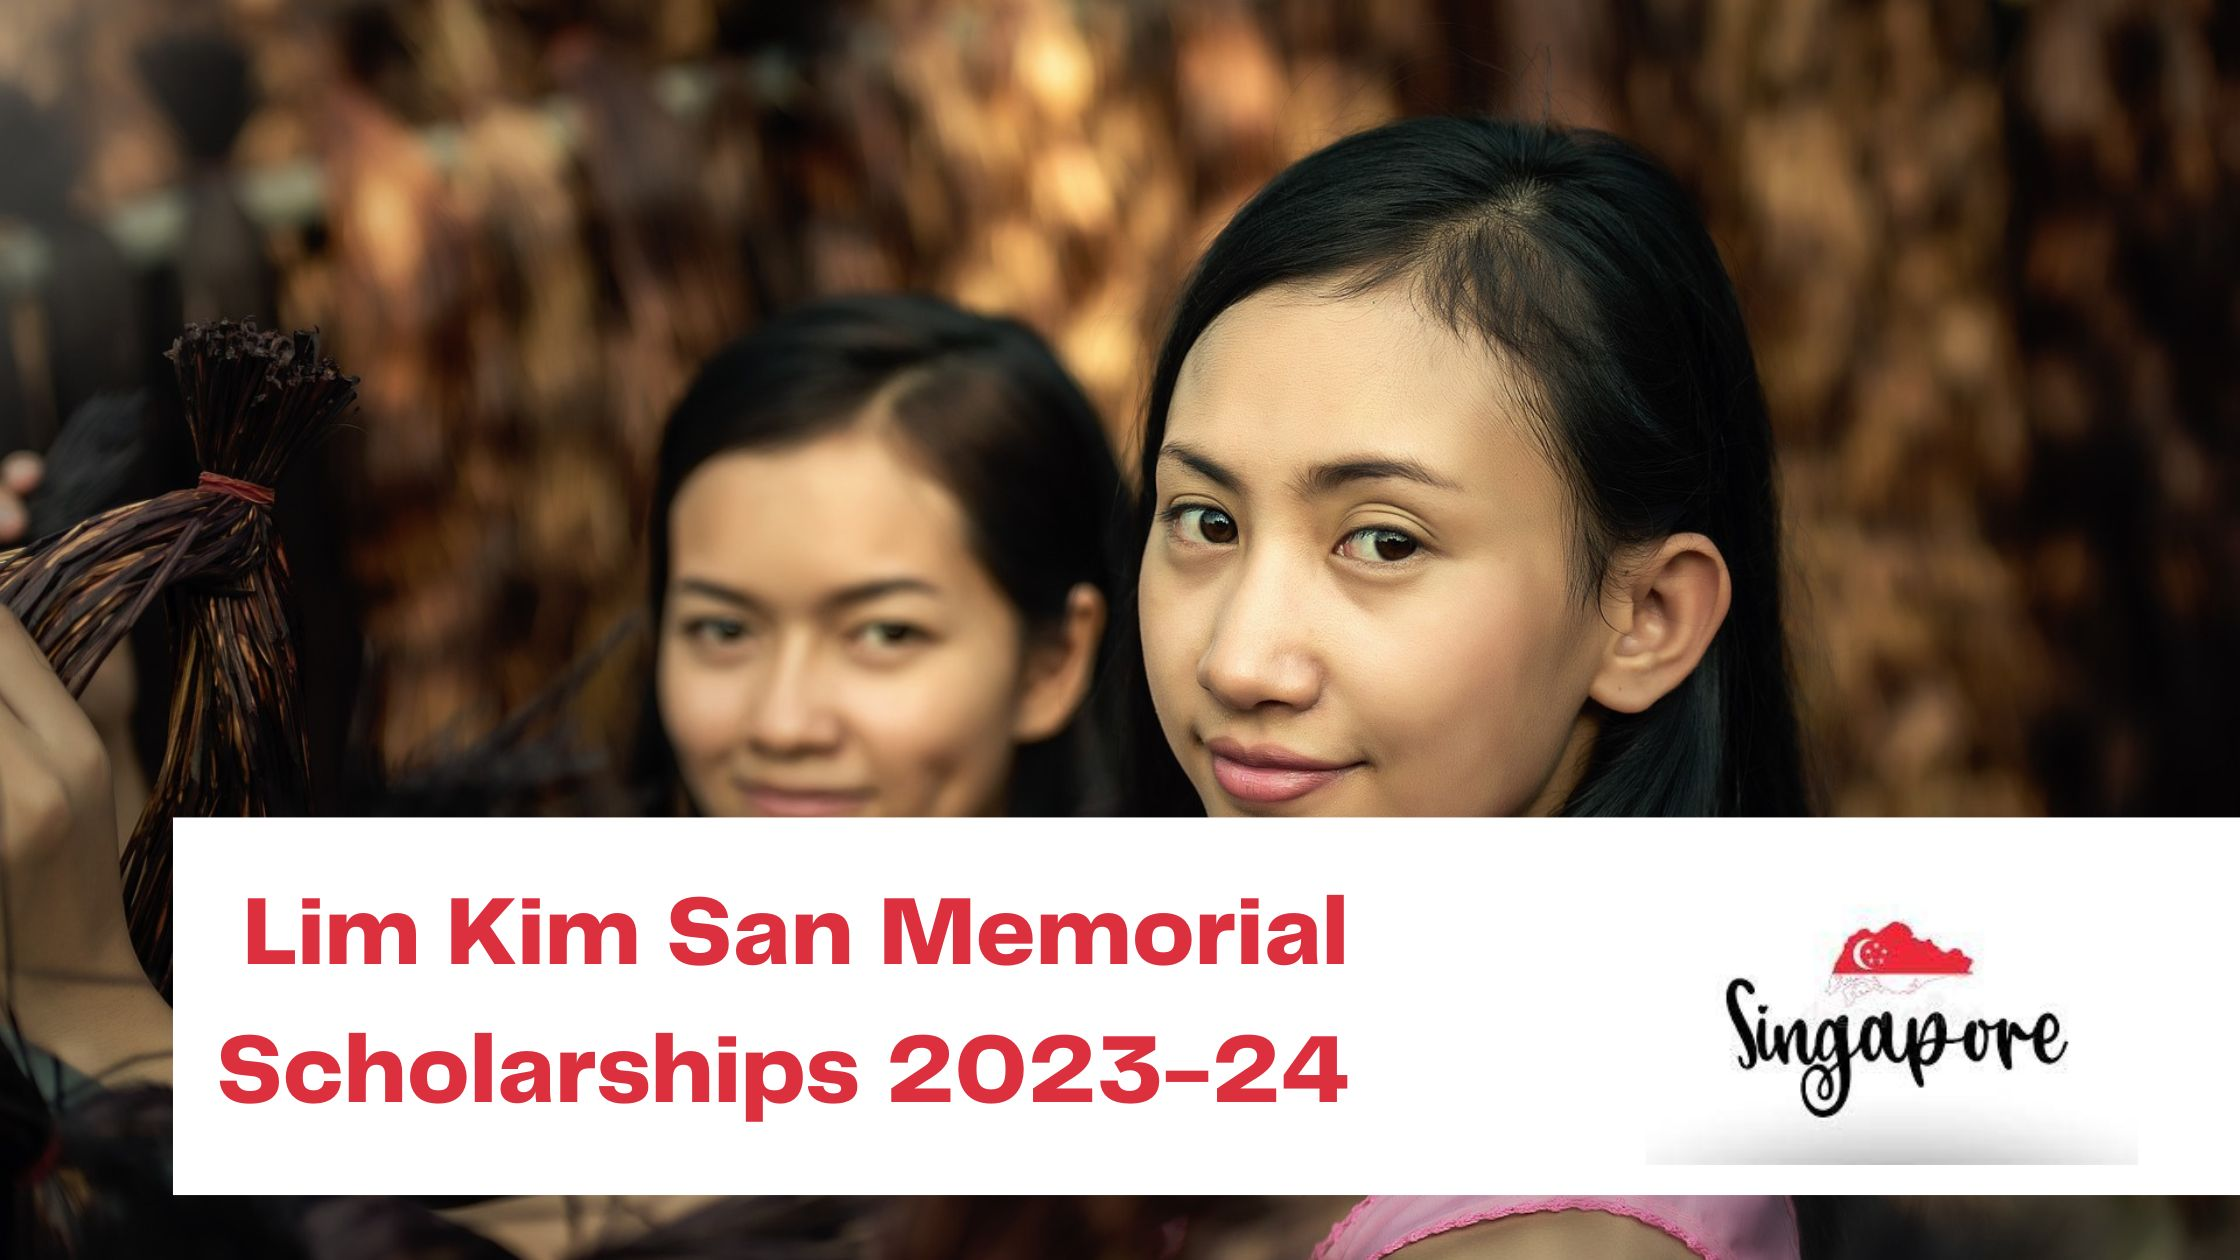 Lim Kim San Memorial Scholarships 2023-24